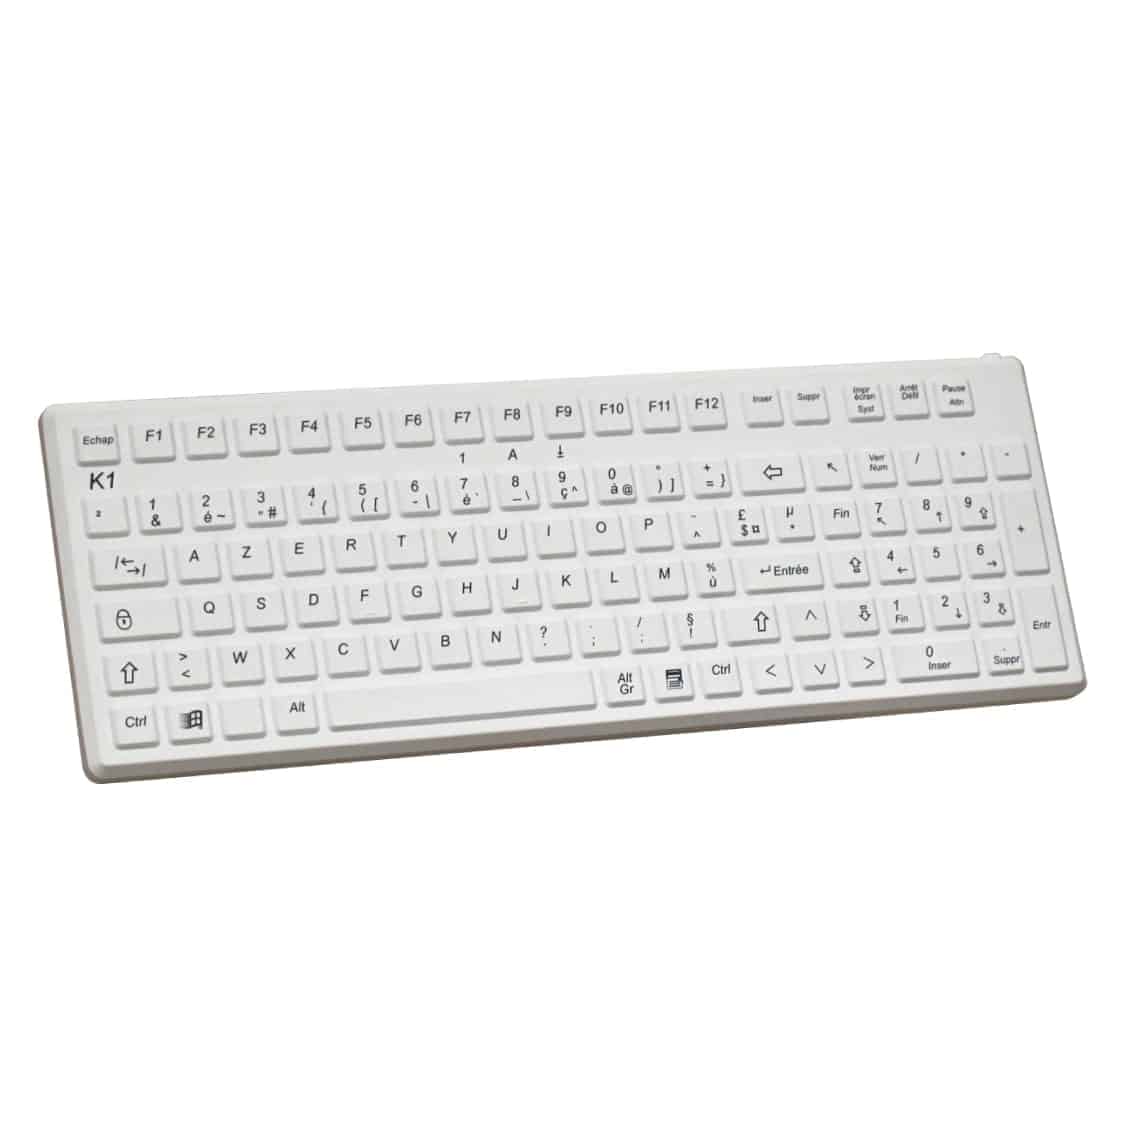 K1 Medical Grade Keyboard